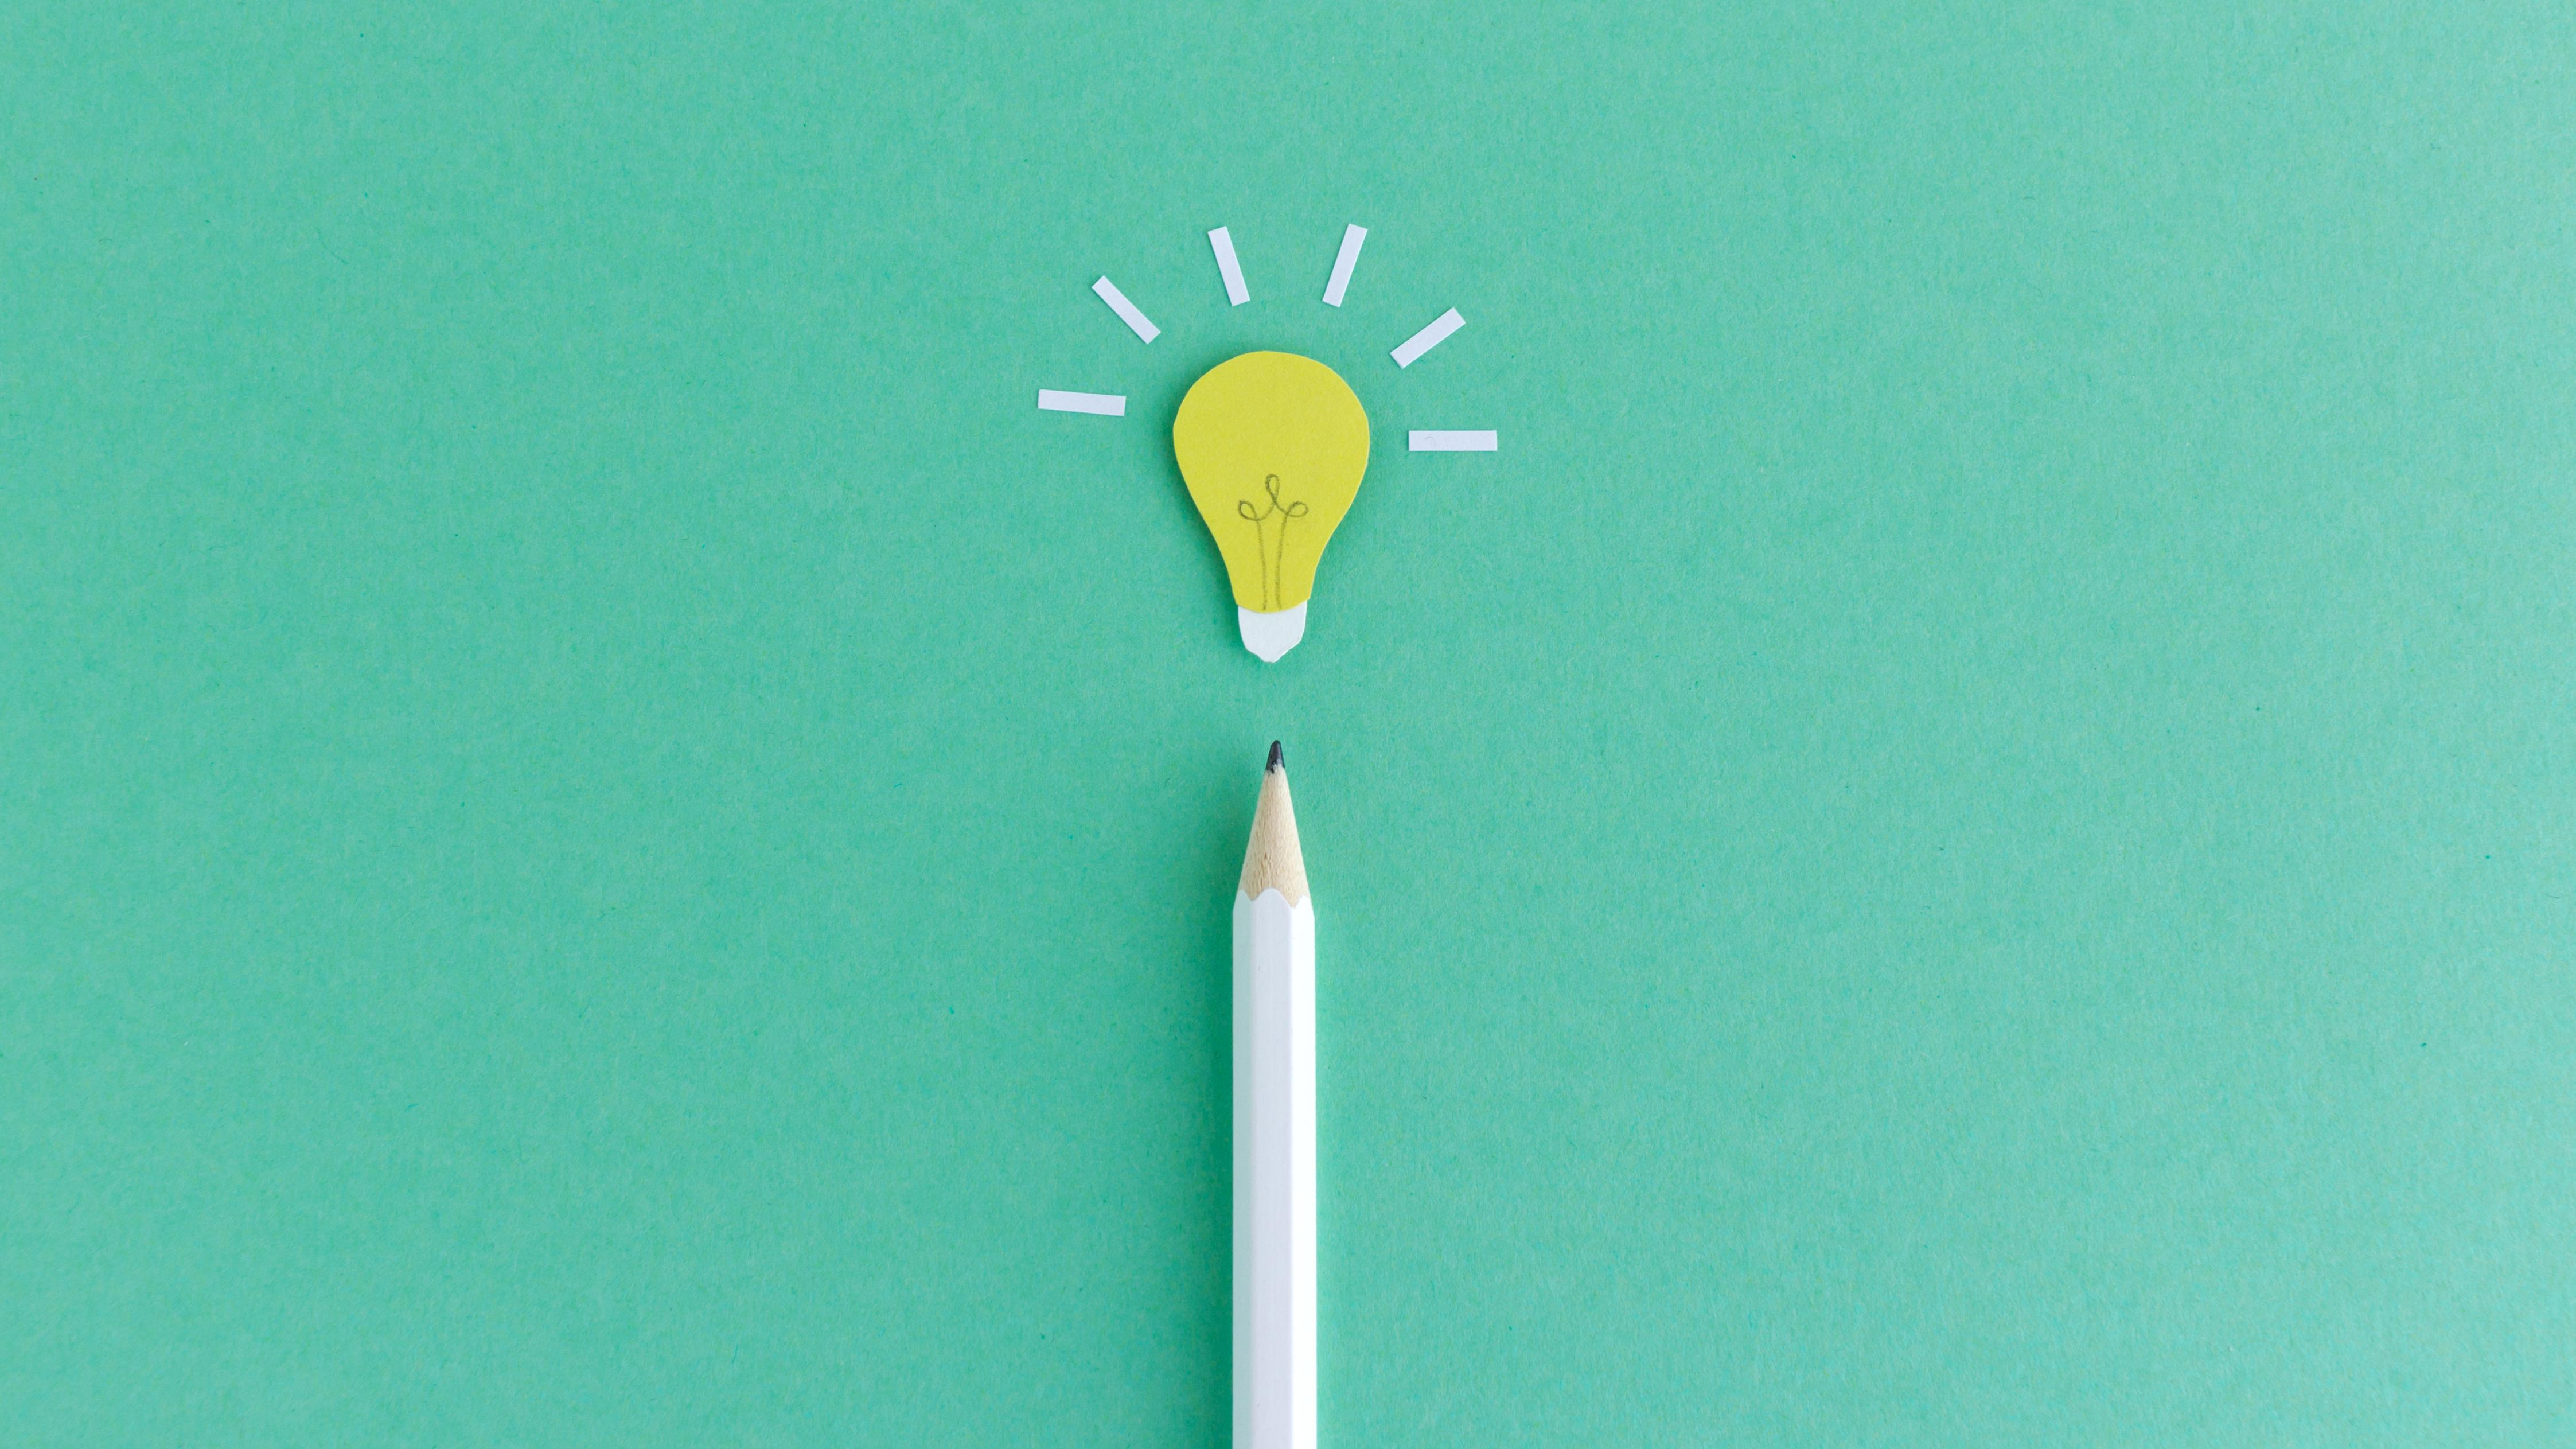 Light bulb illustration on top of pencil